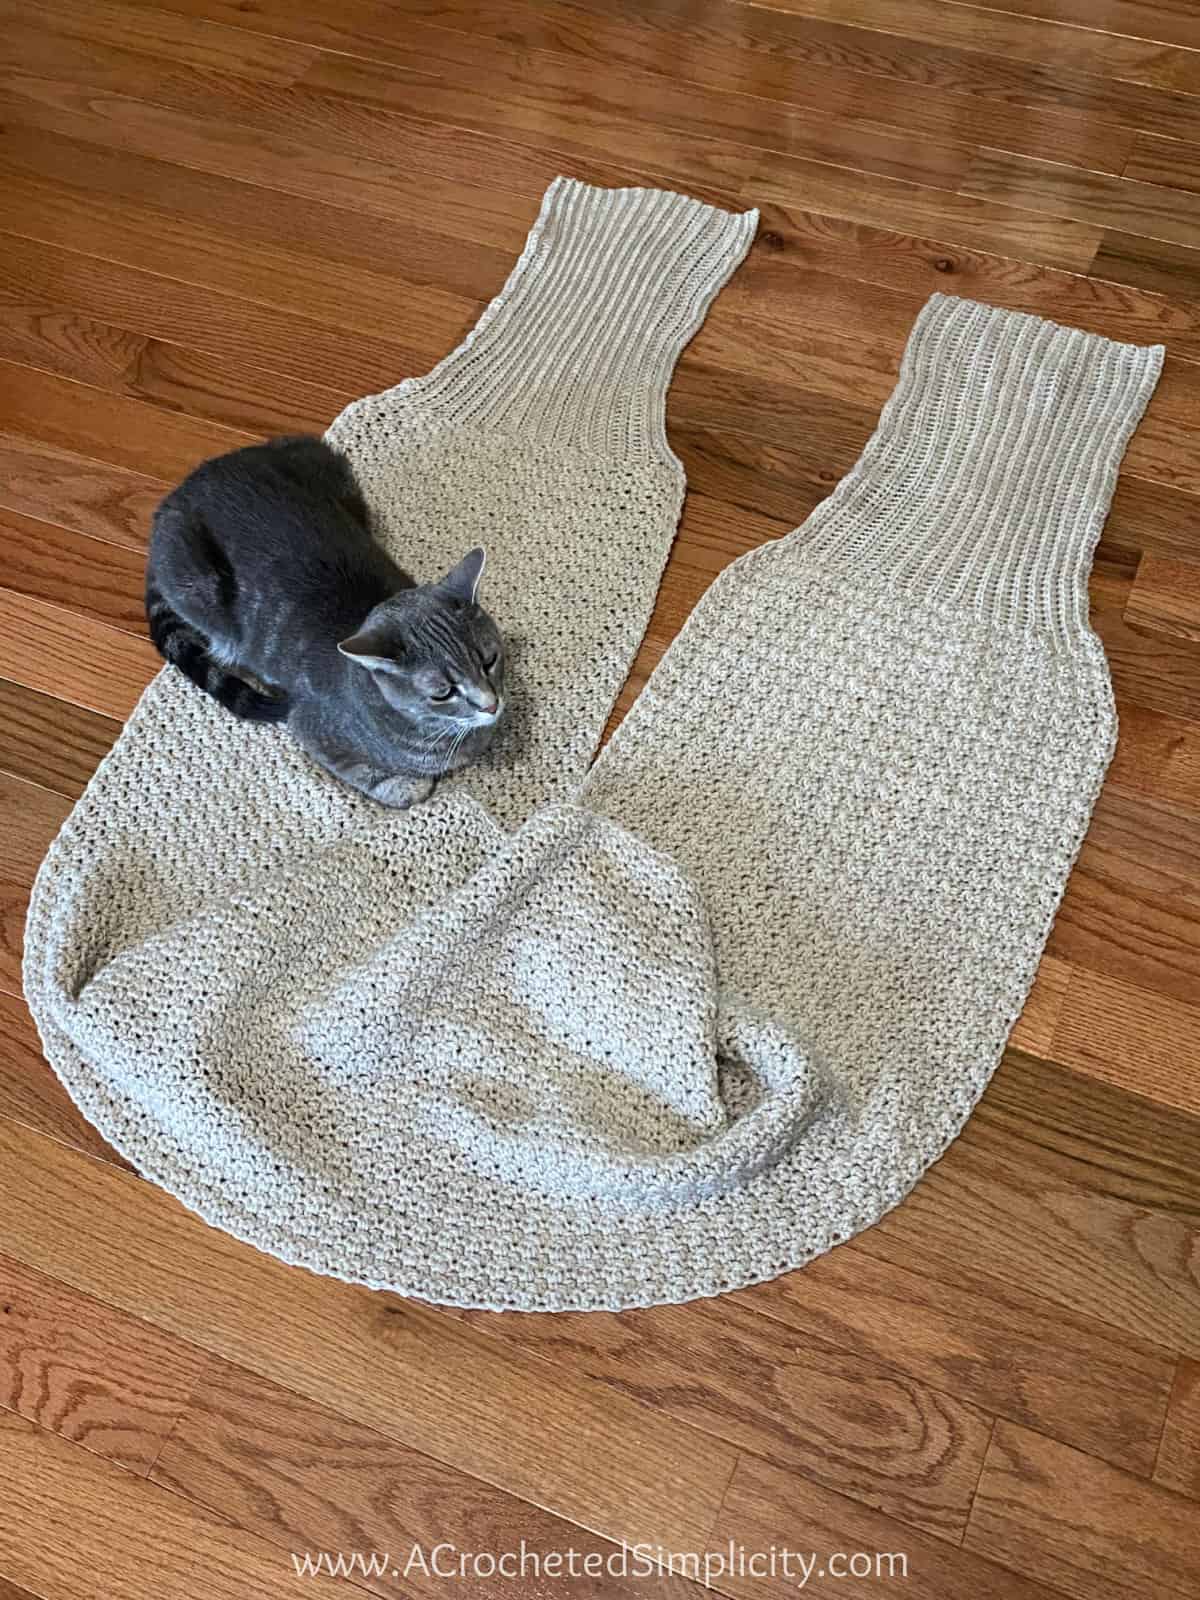 Grey kitty cat laying on a crochet sweater sc arf